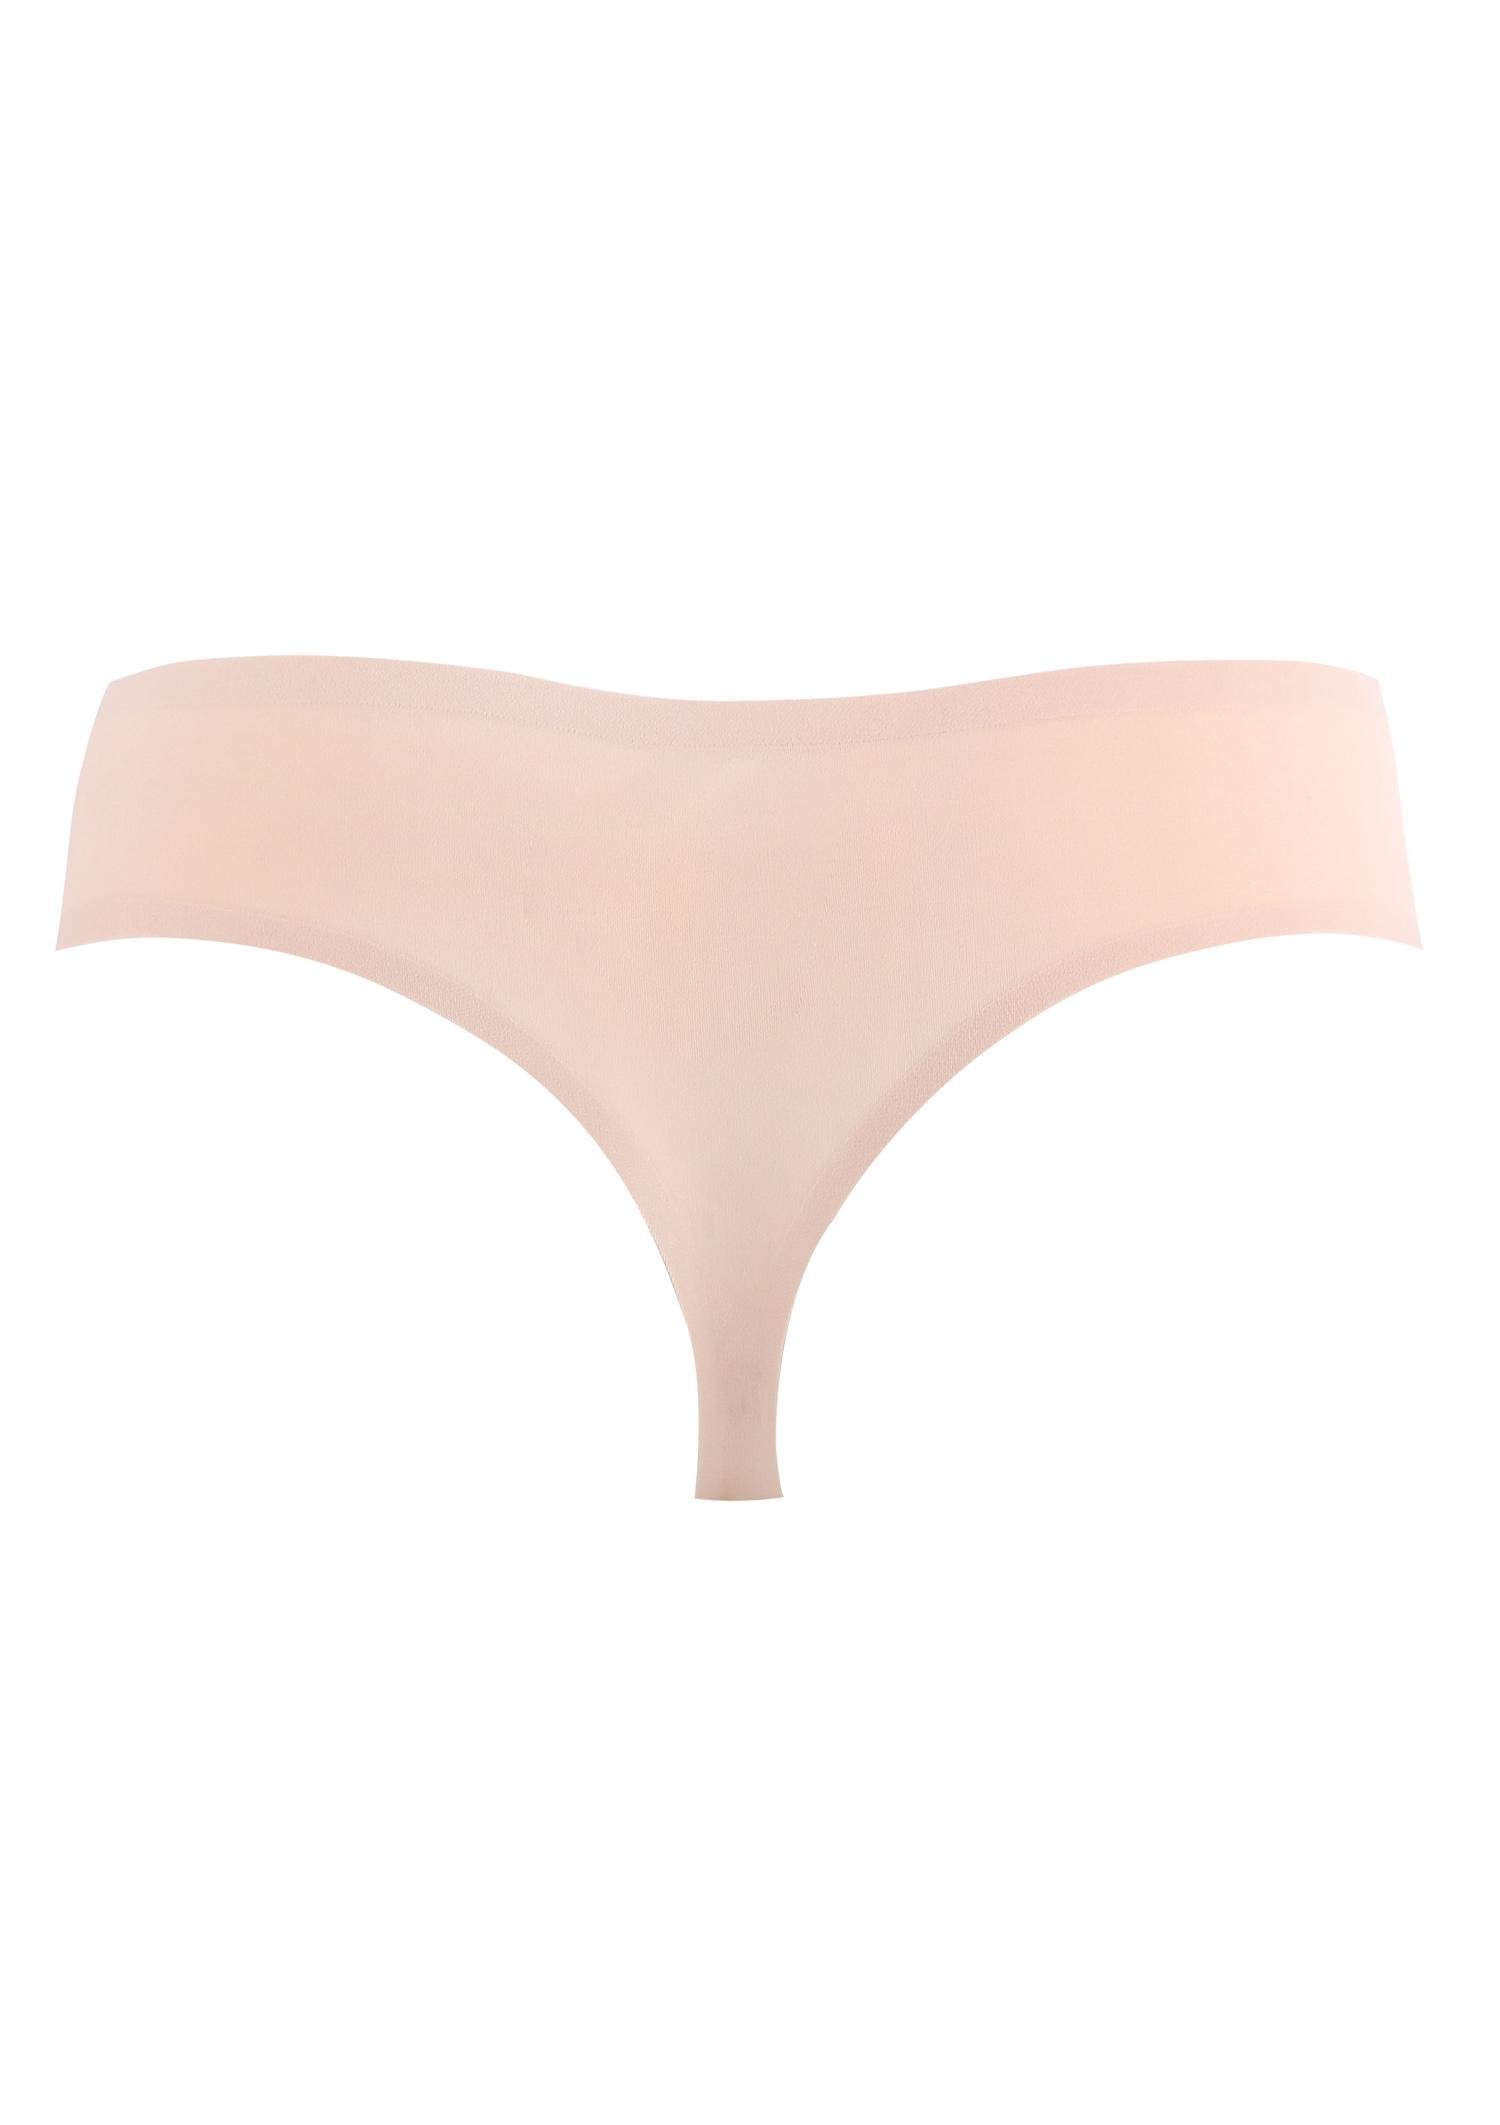 Women's Basic Underwear Thong, Cotton Panties, Lot of 5-10, S, M, L, XL